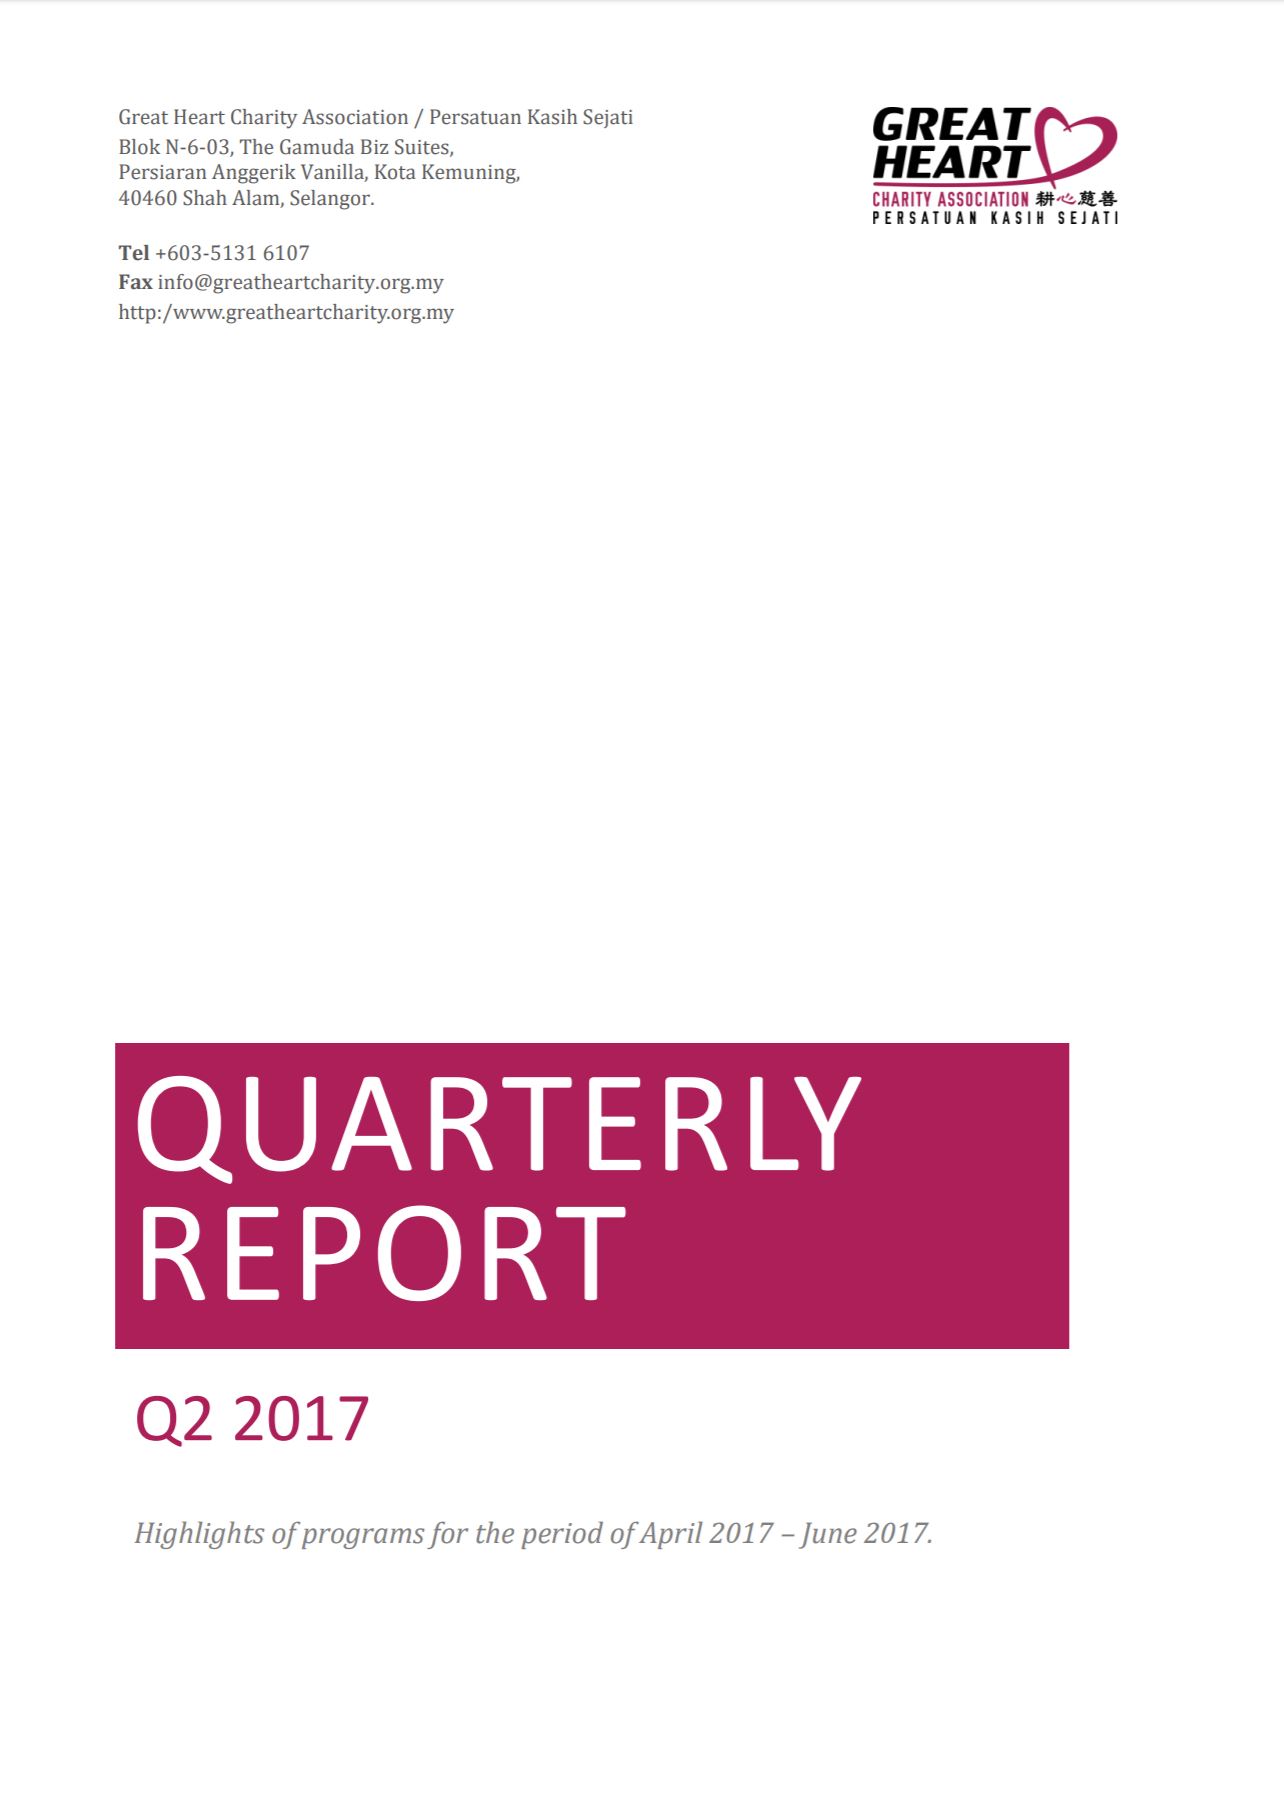 Great Heart Quarterly Report - Quarter 2 - 2017